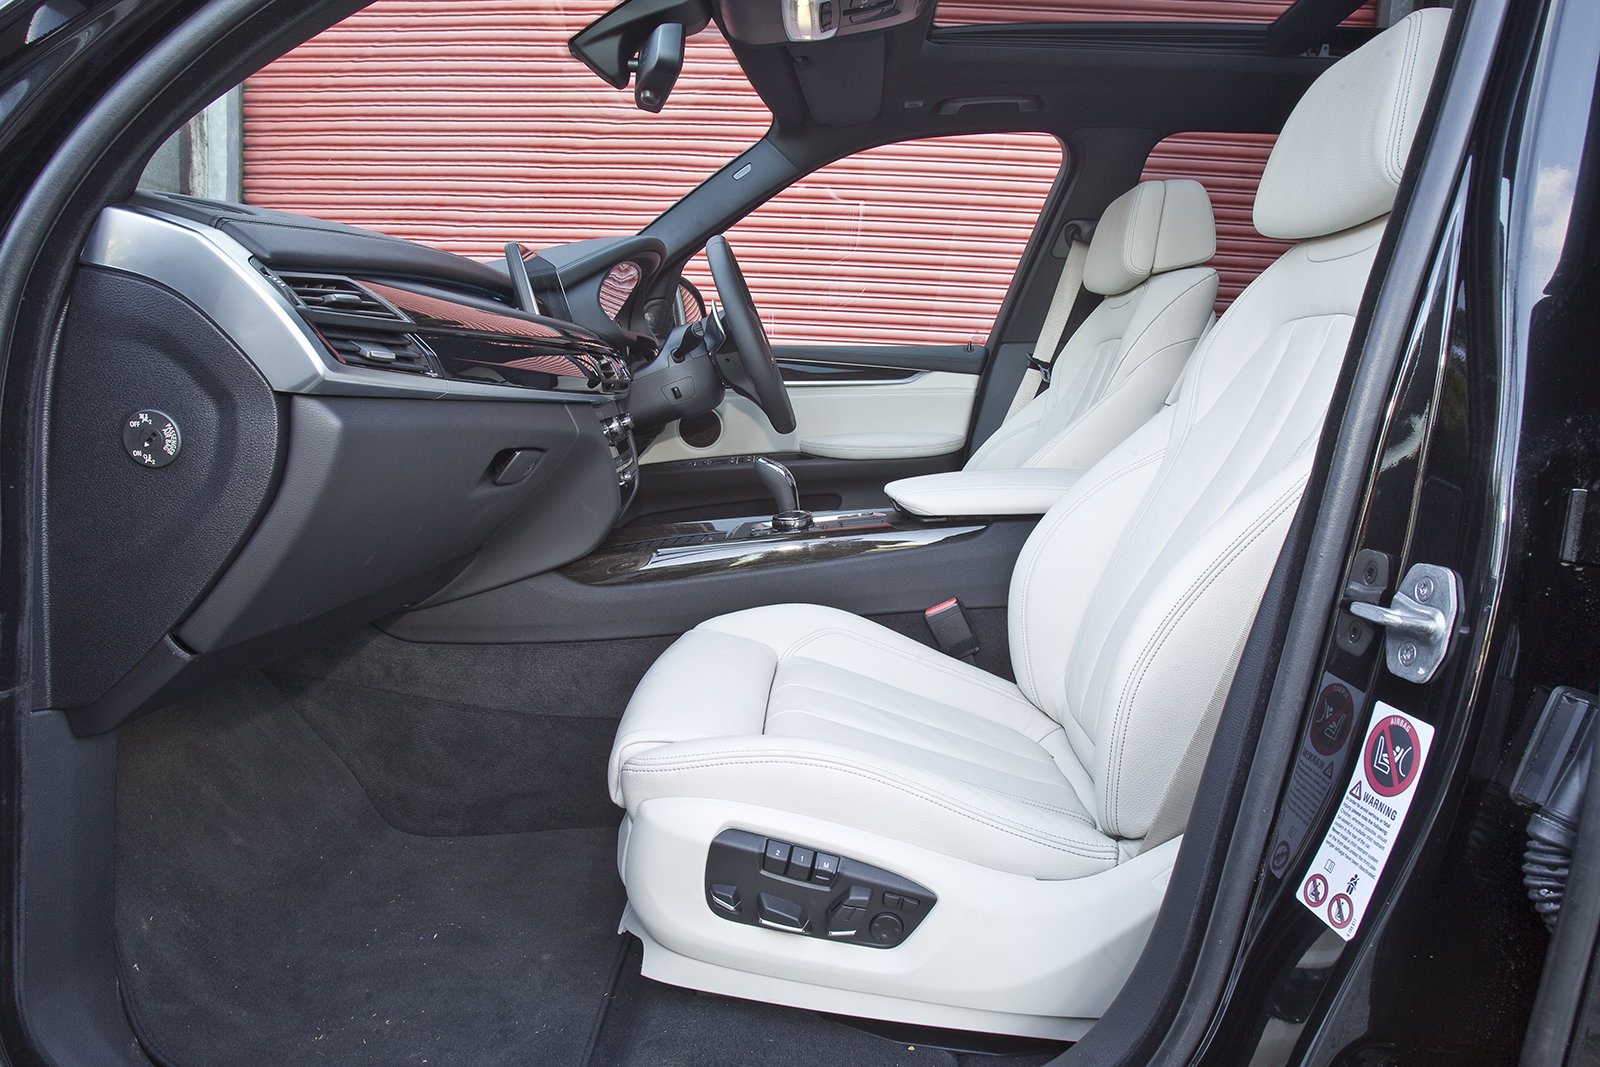 BMW X5 front seats